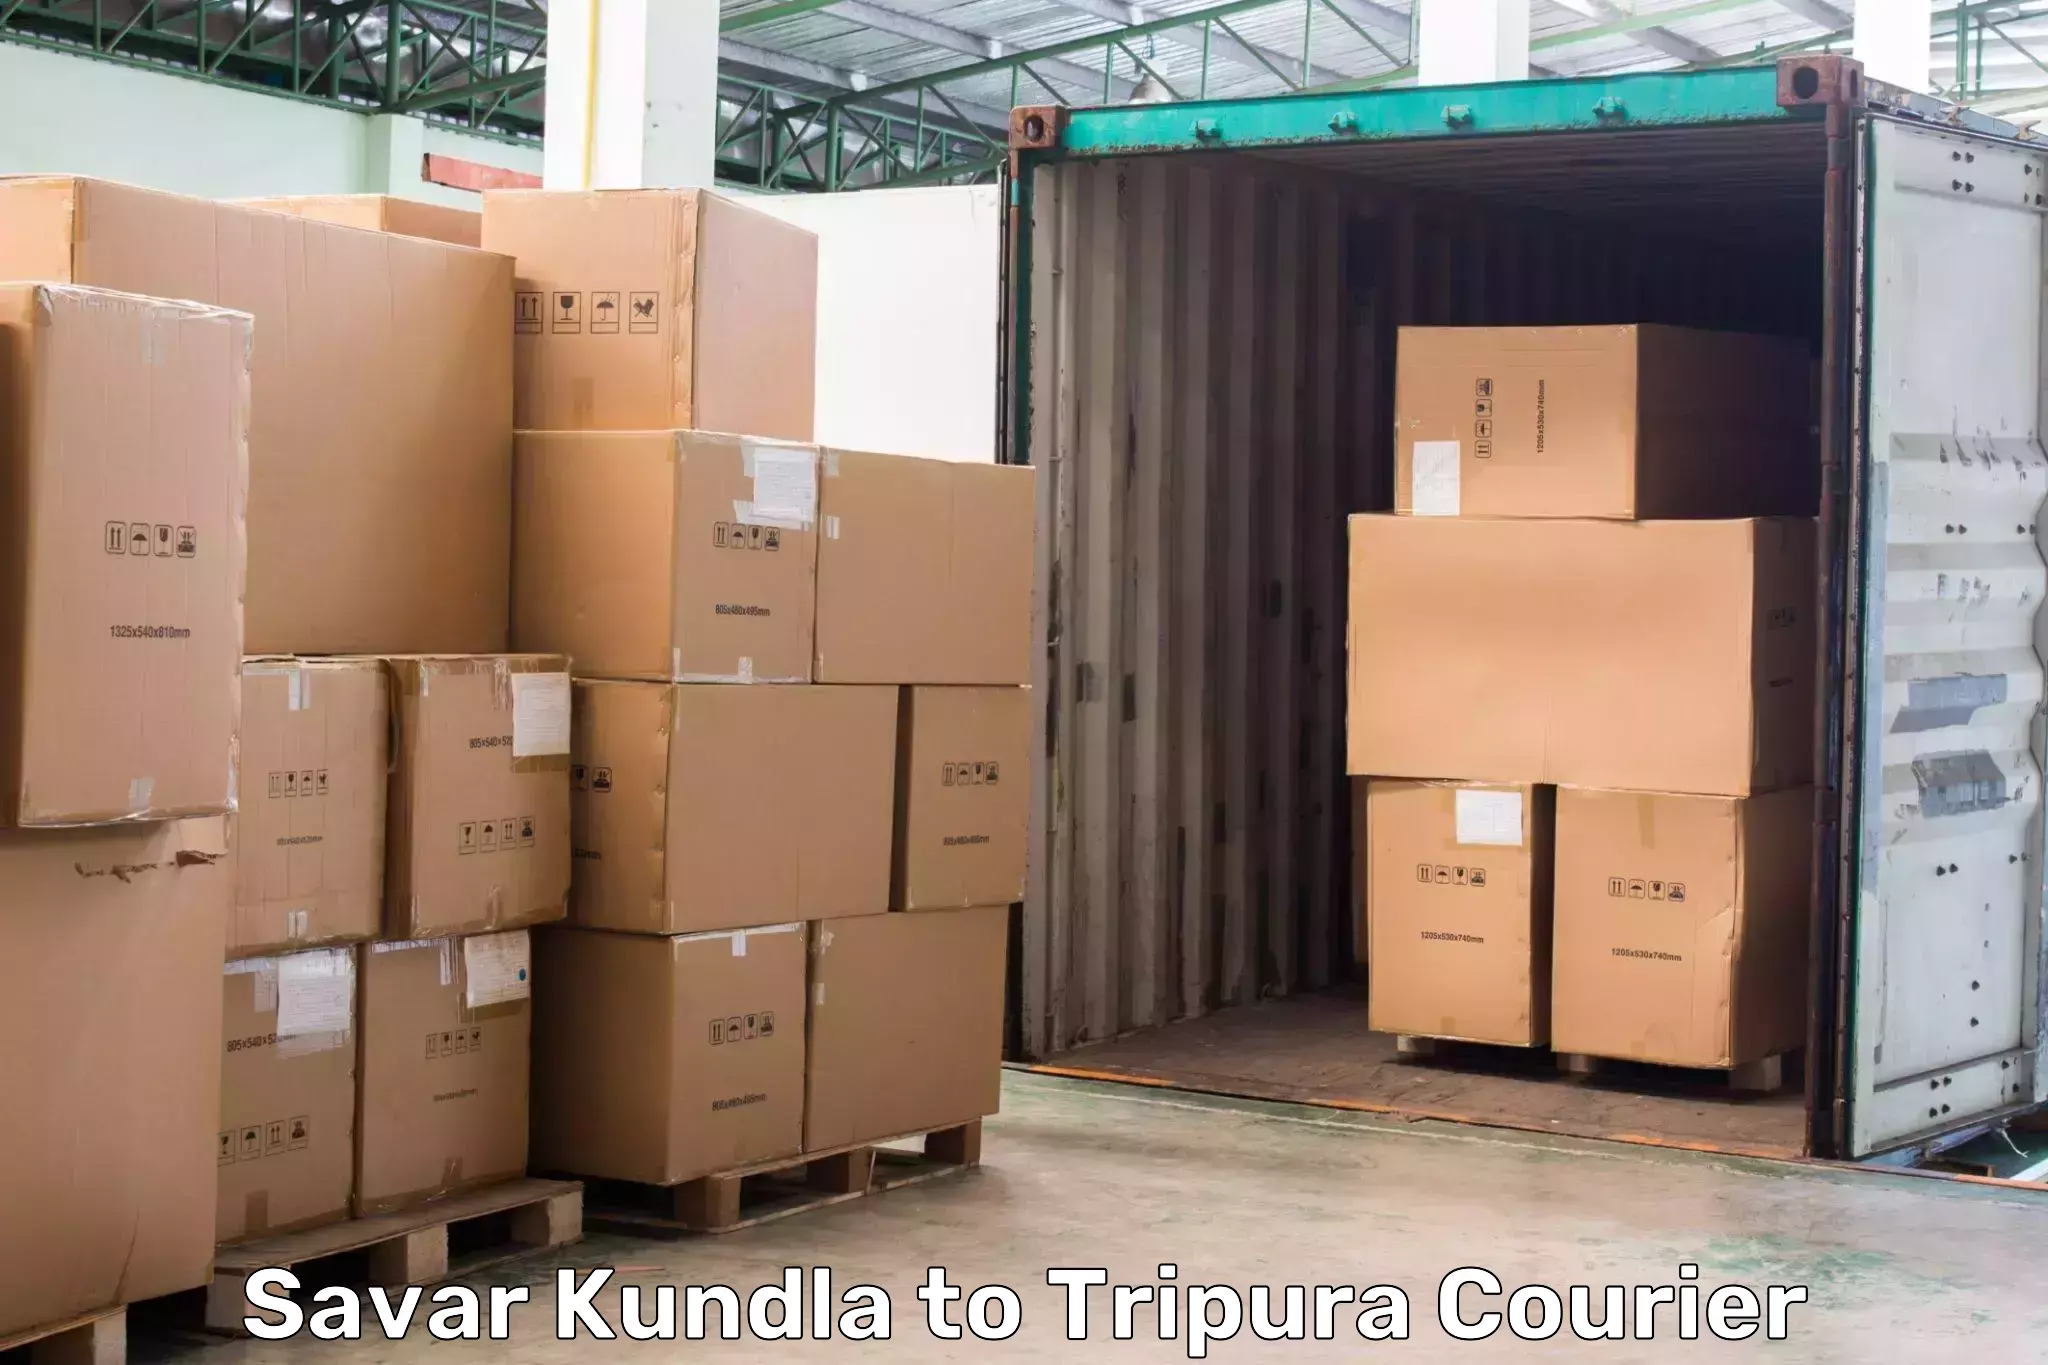 Express package services Savar Kundla to Tripura